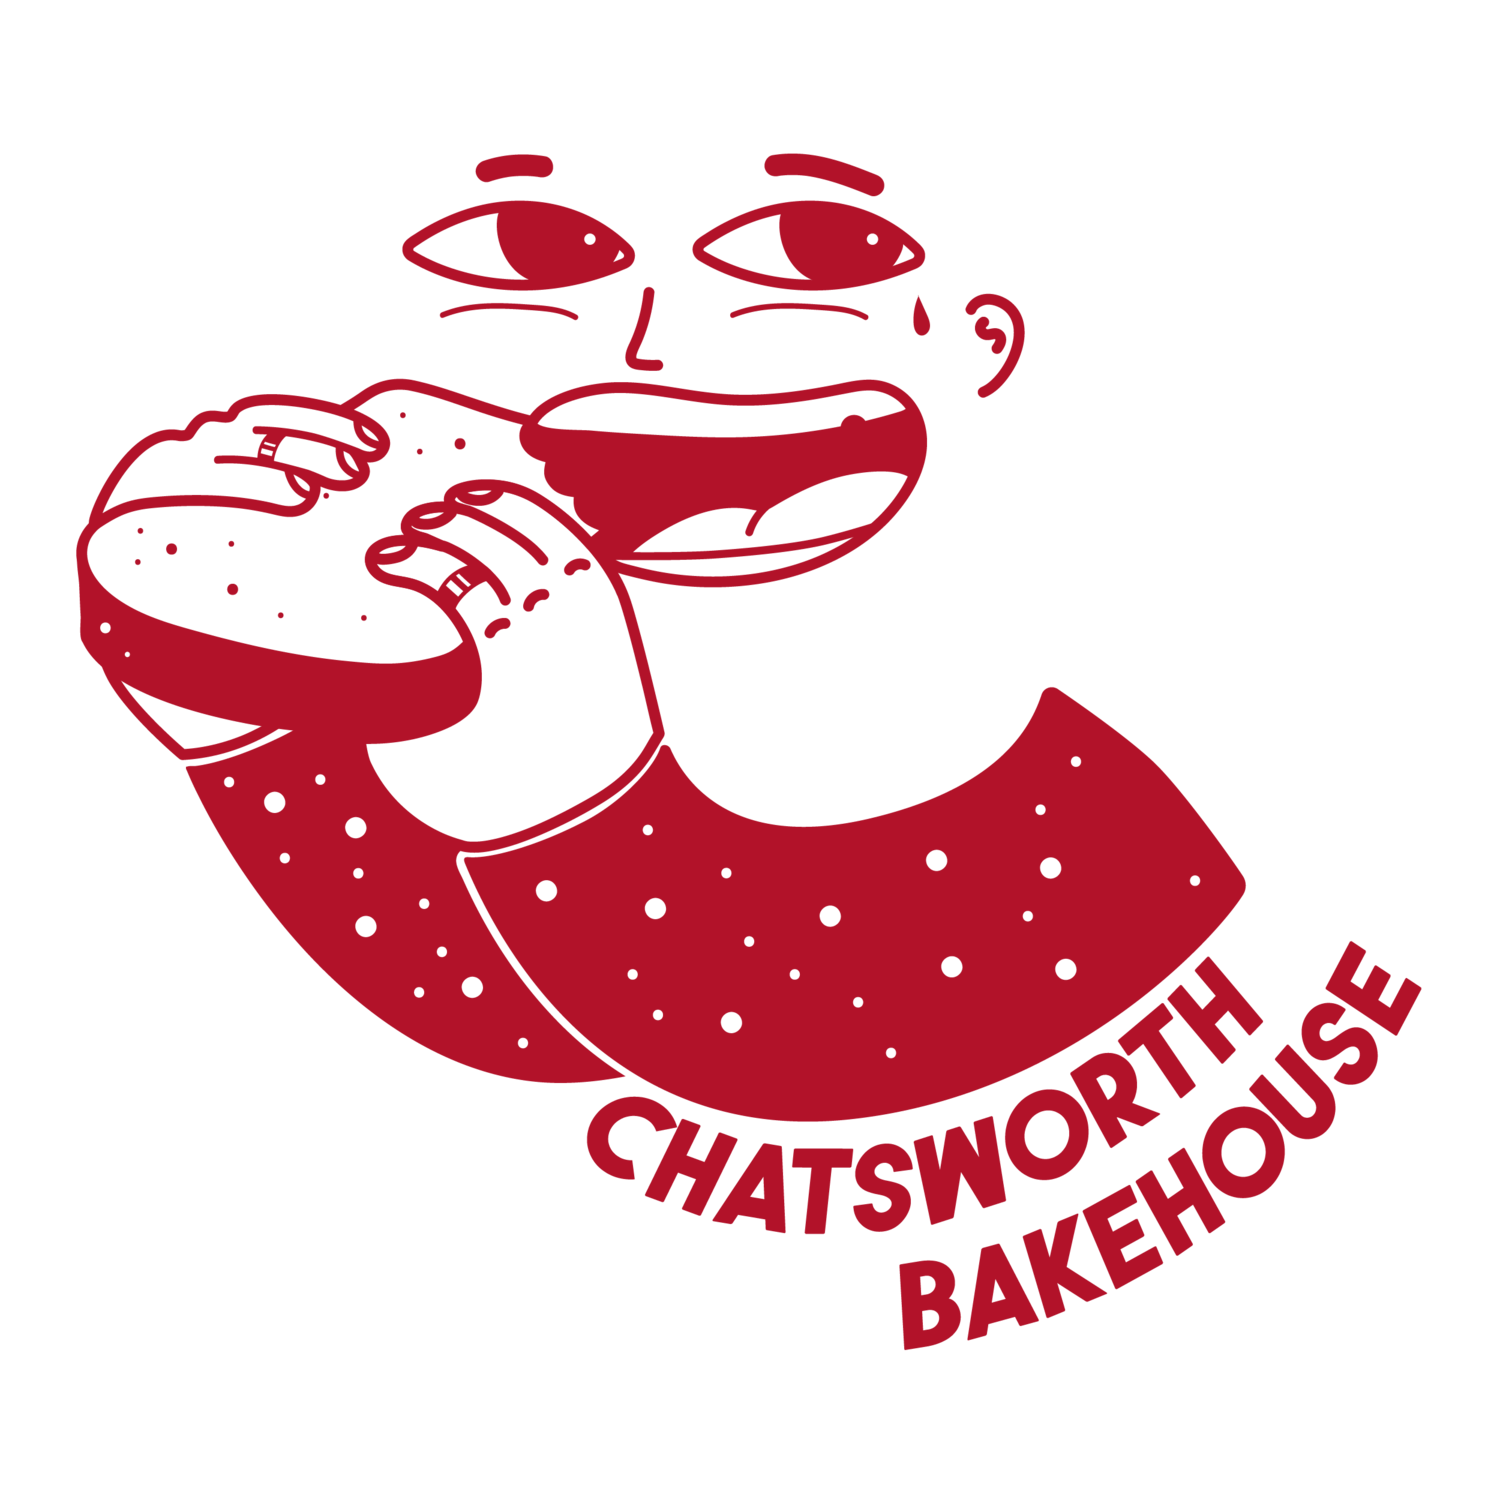 Chatsworth Bakehouse